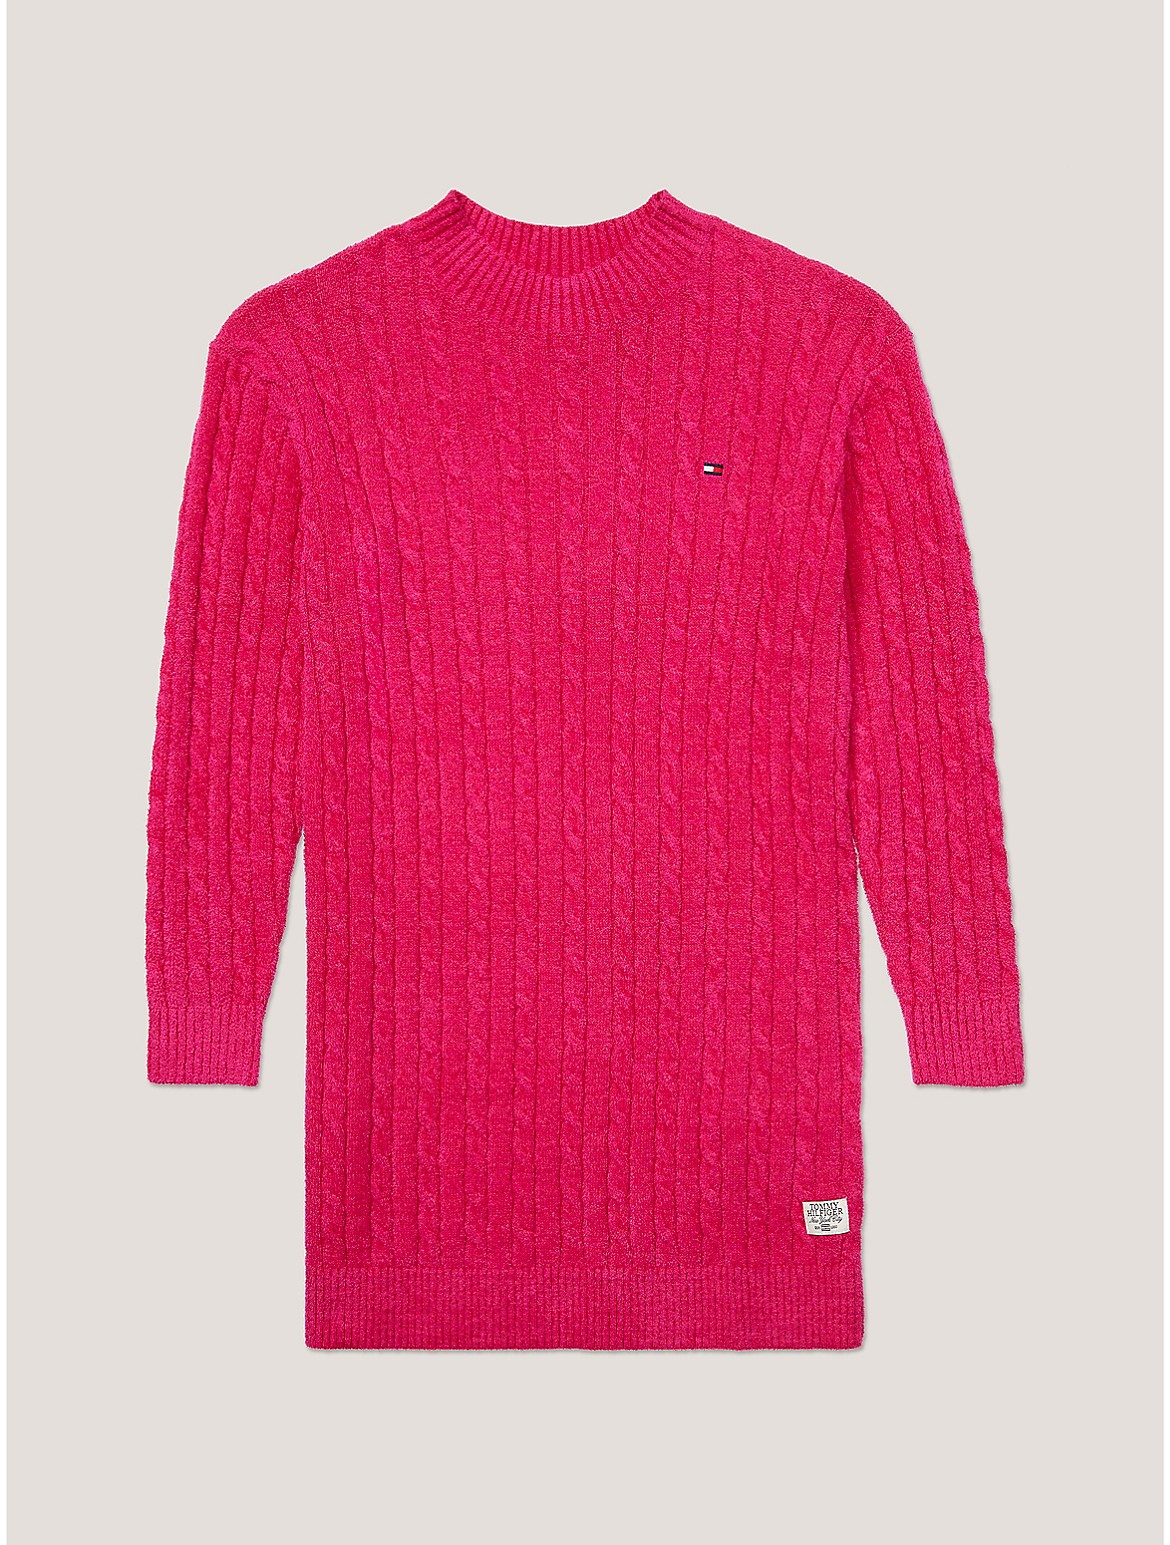 Tommy Hilfiger Girls' Kids' Cable Knit Sweater Dress - Pink - XXS